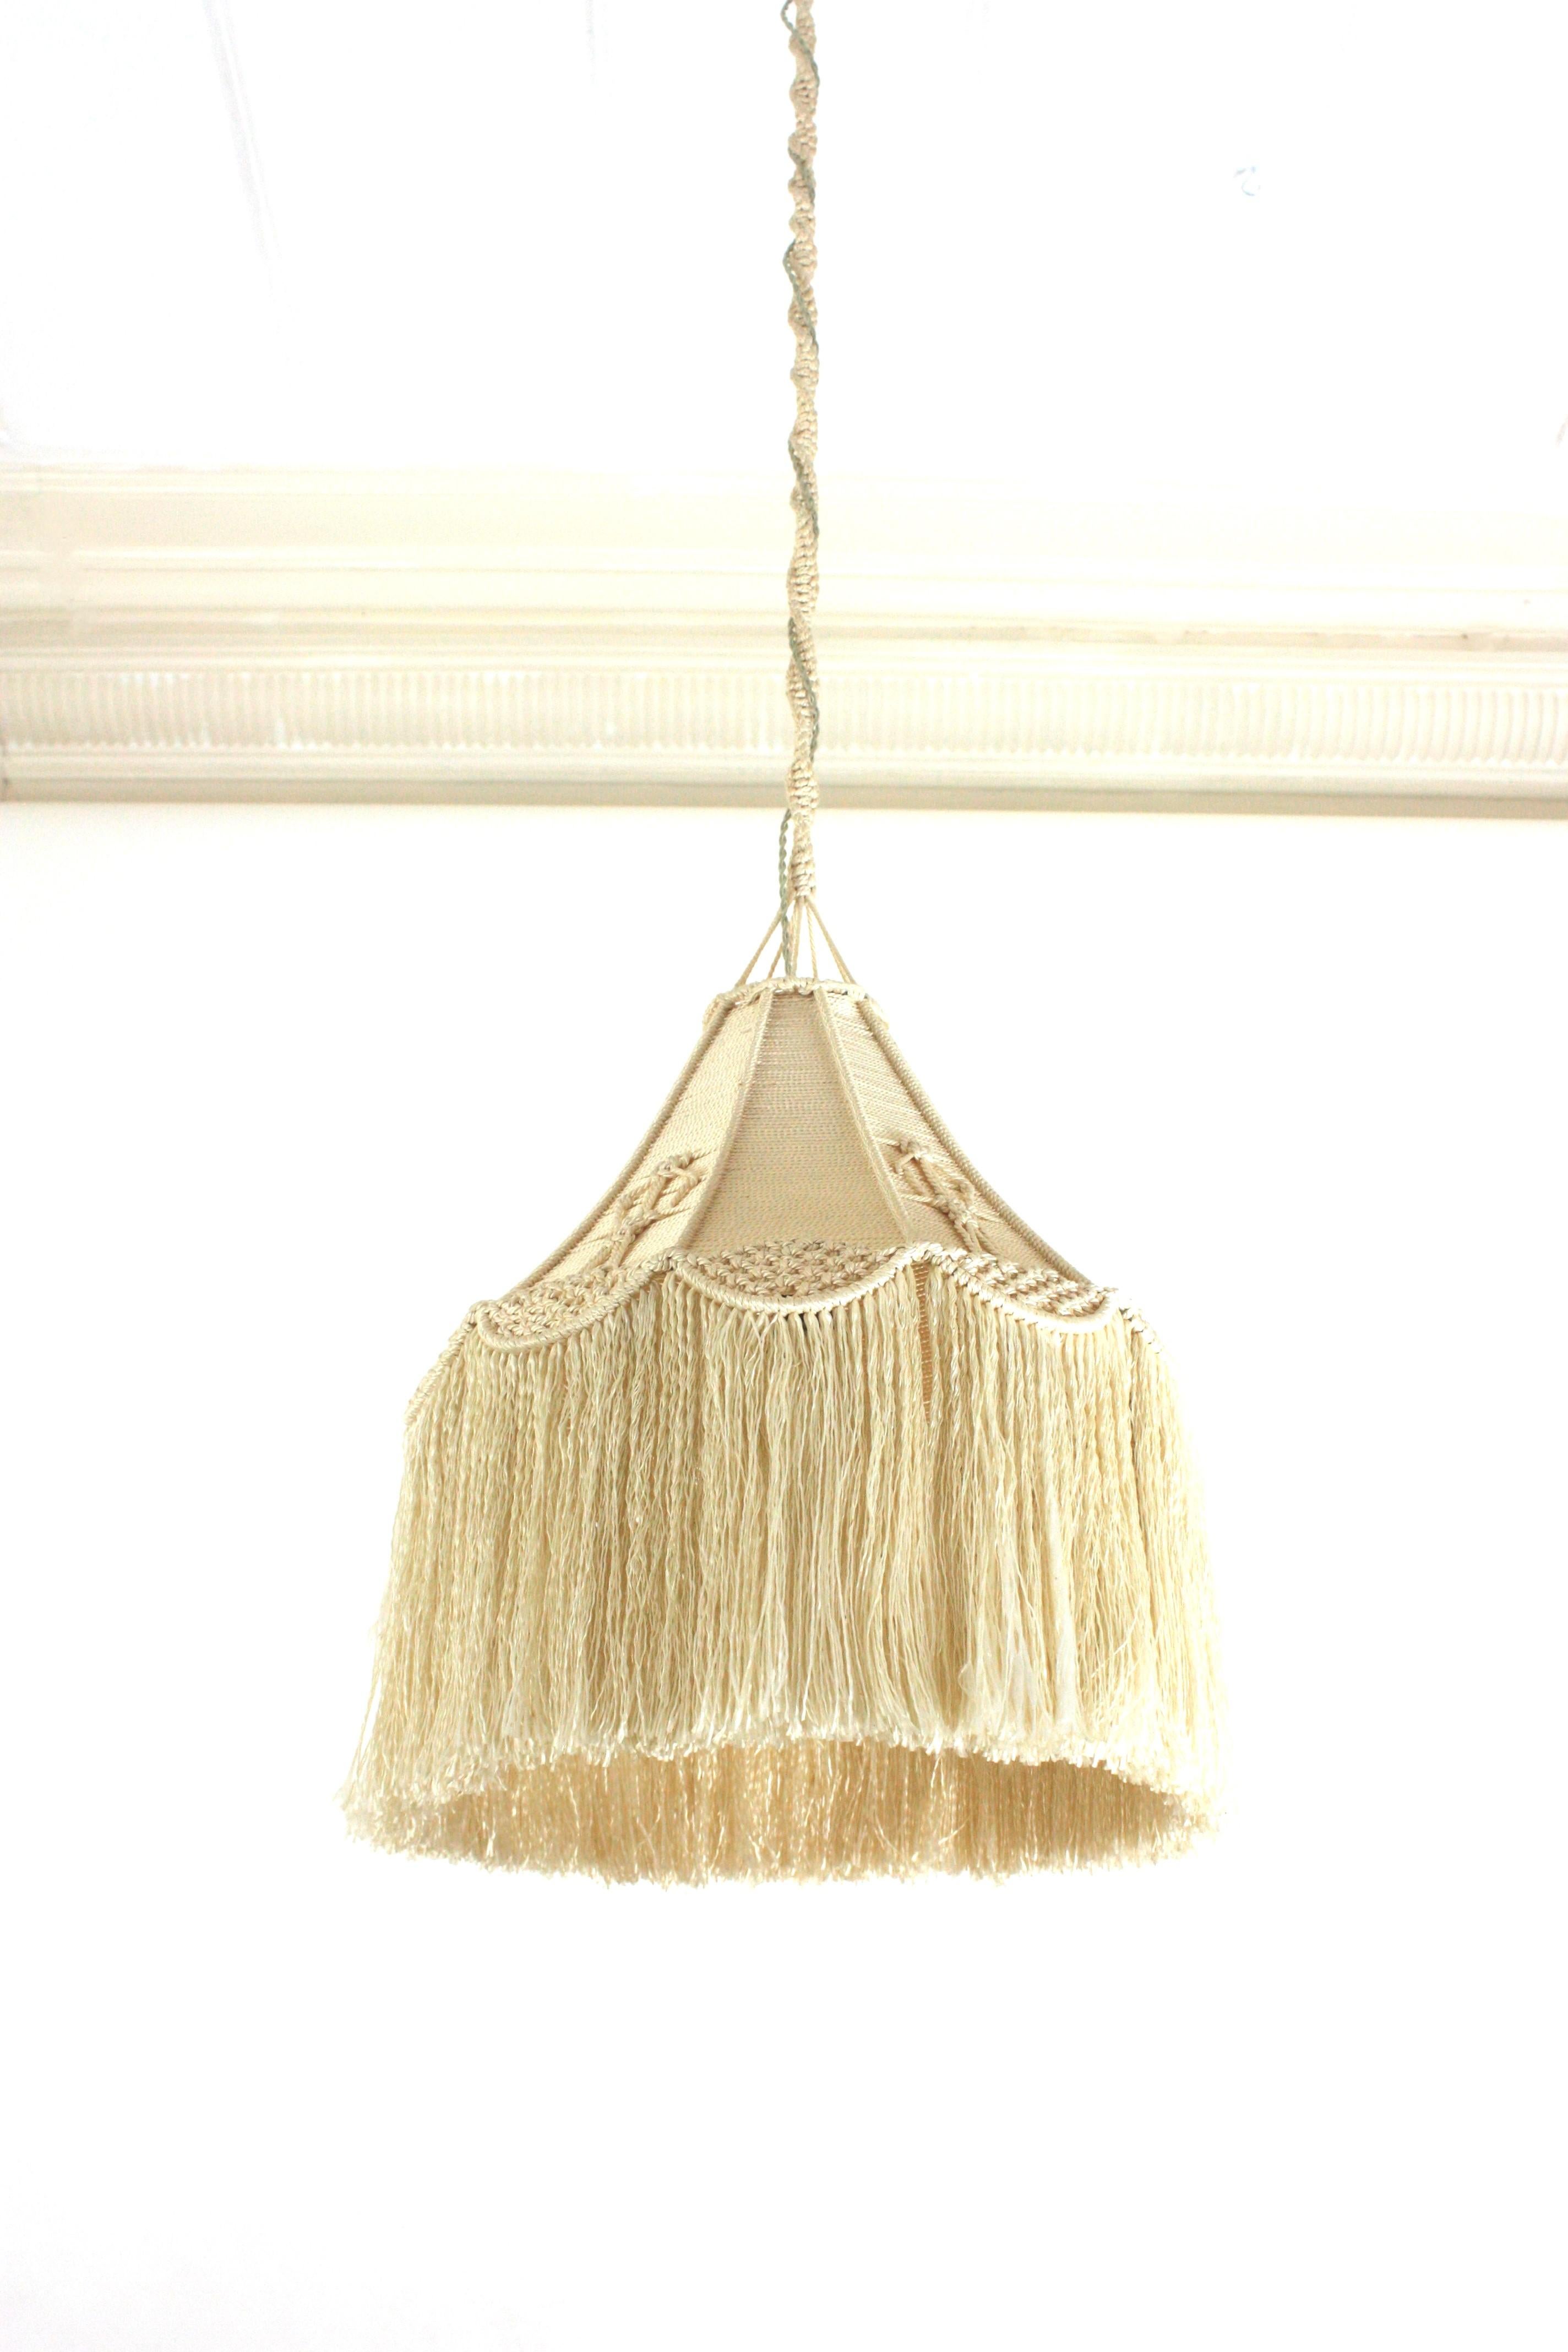 Bohemian Macrame Fiber Pendant Ceiling Hanging Lamp with Fringe For Sale 5